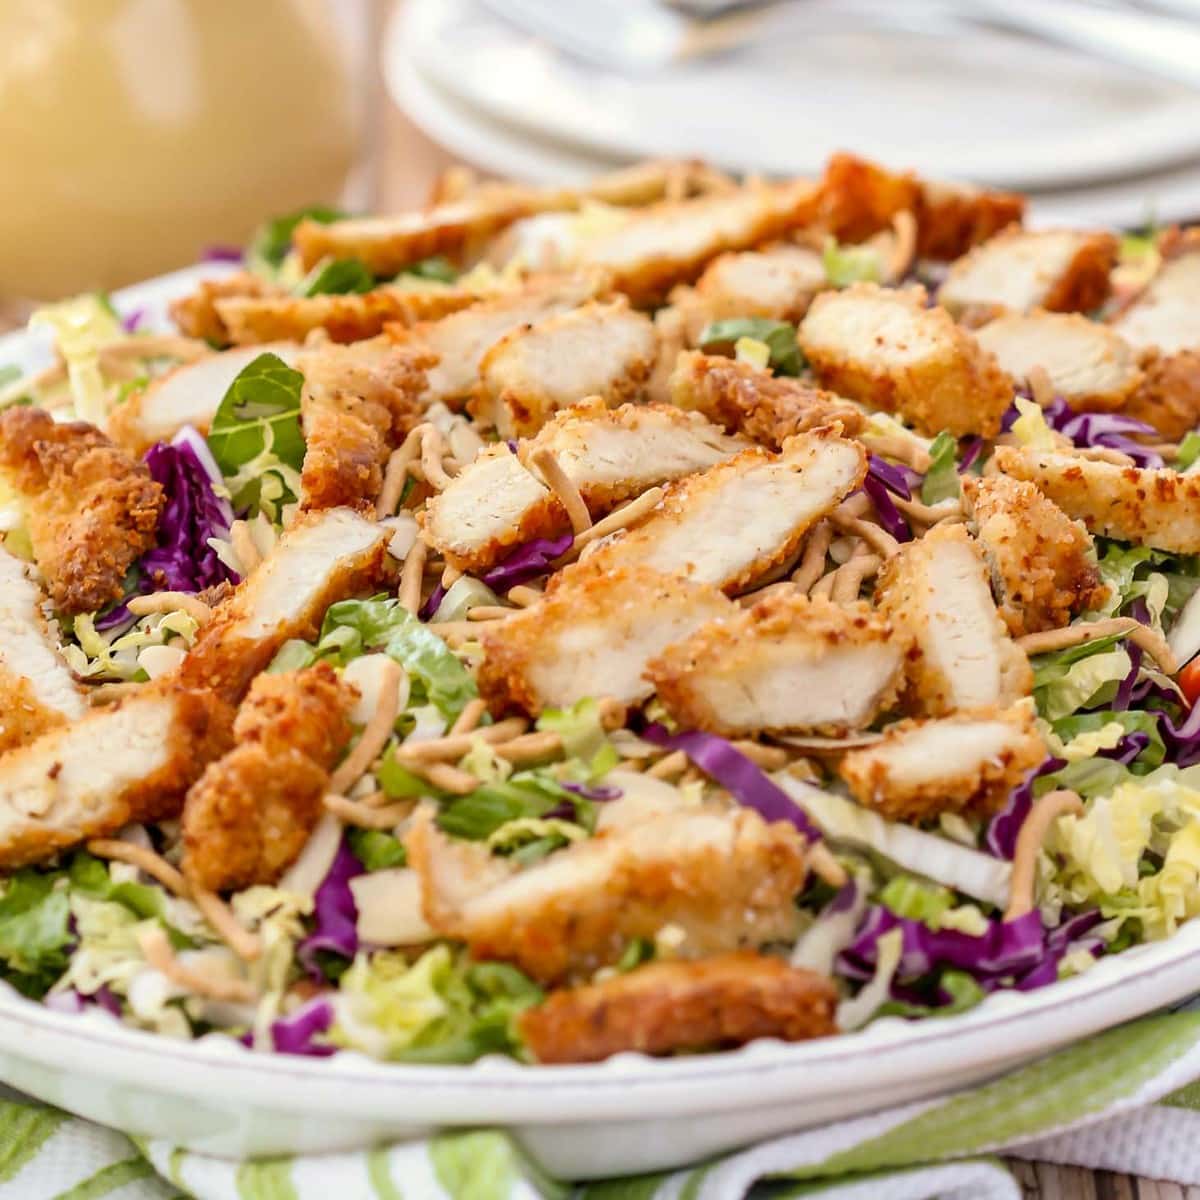 Applebees Oriental Chicken Salad Recipe (+VIDEO)